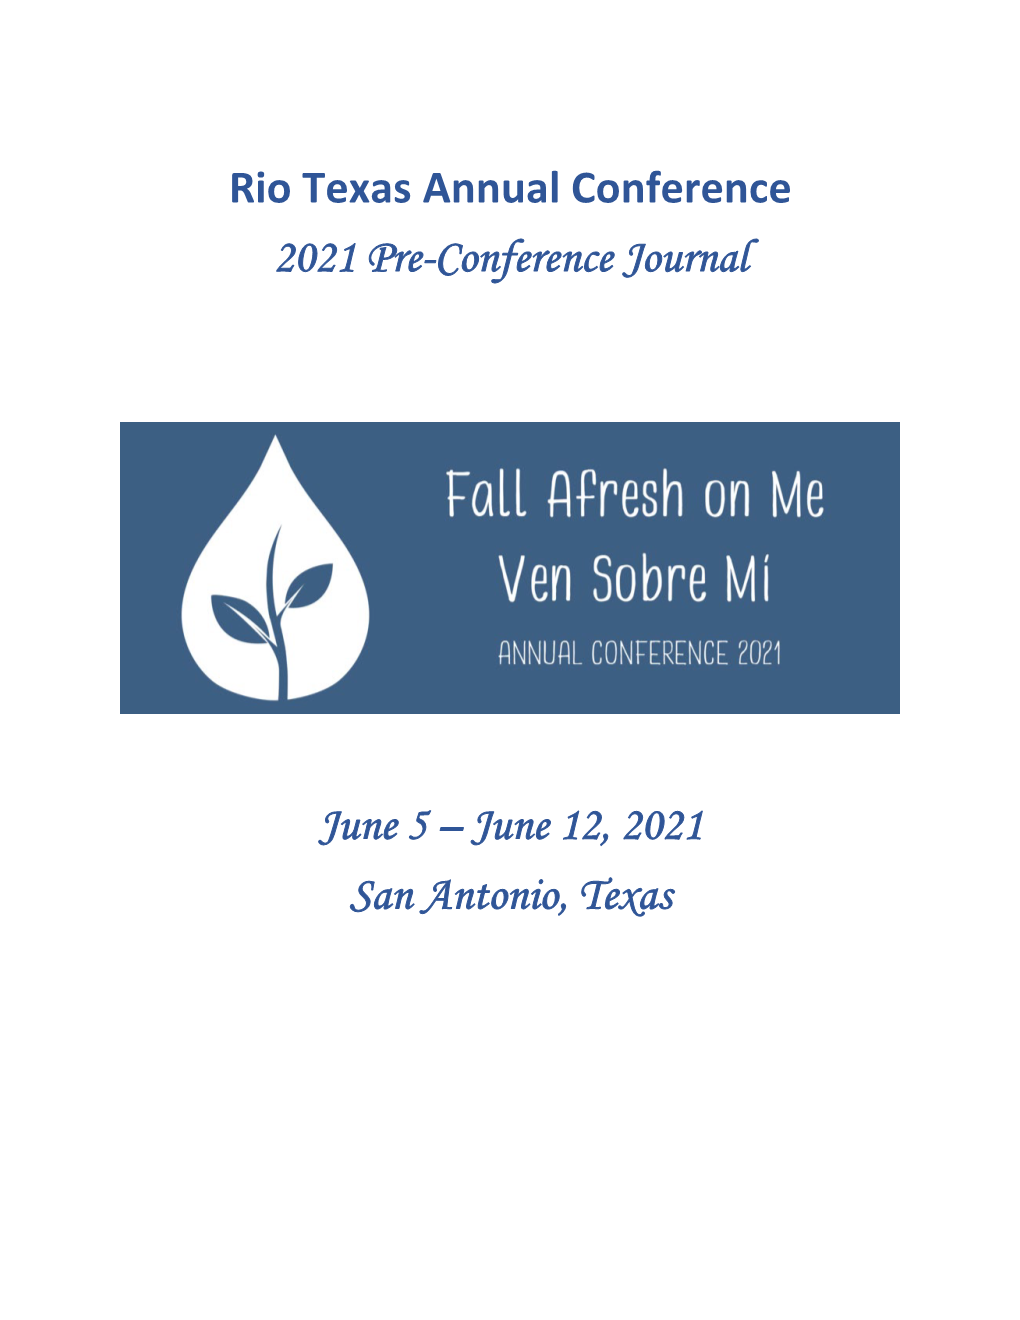 Rio Texas Annual Conference 2021 Pre-Conference Journal June 5